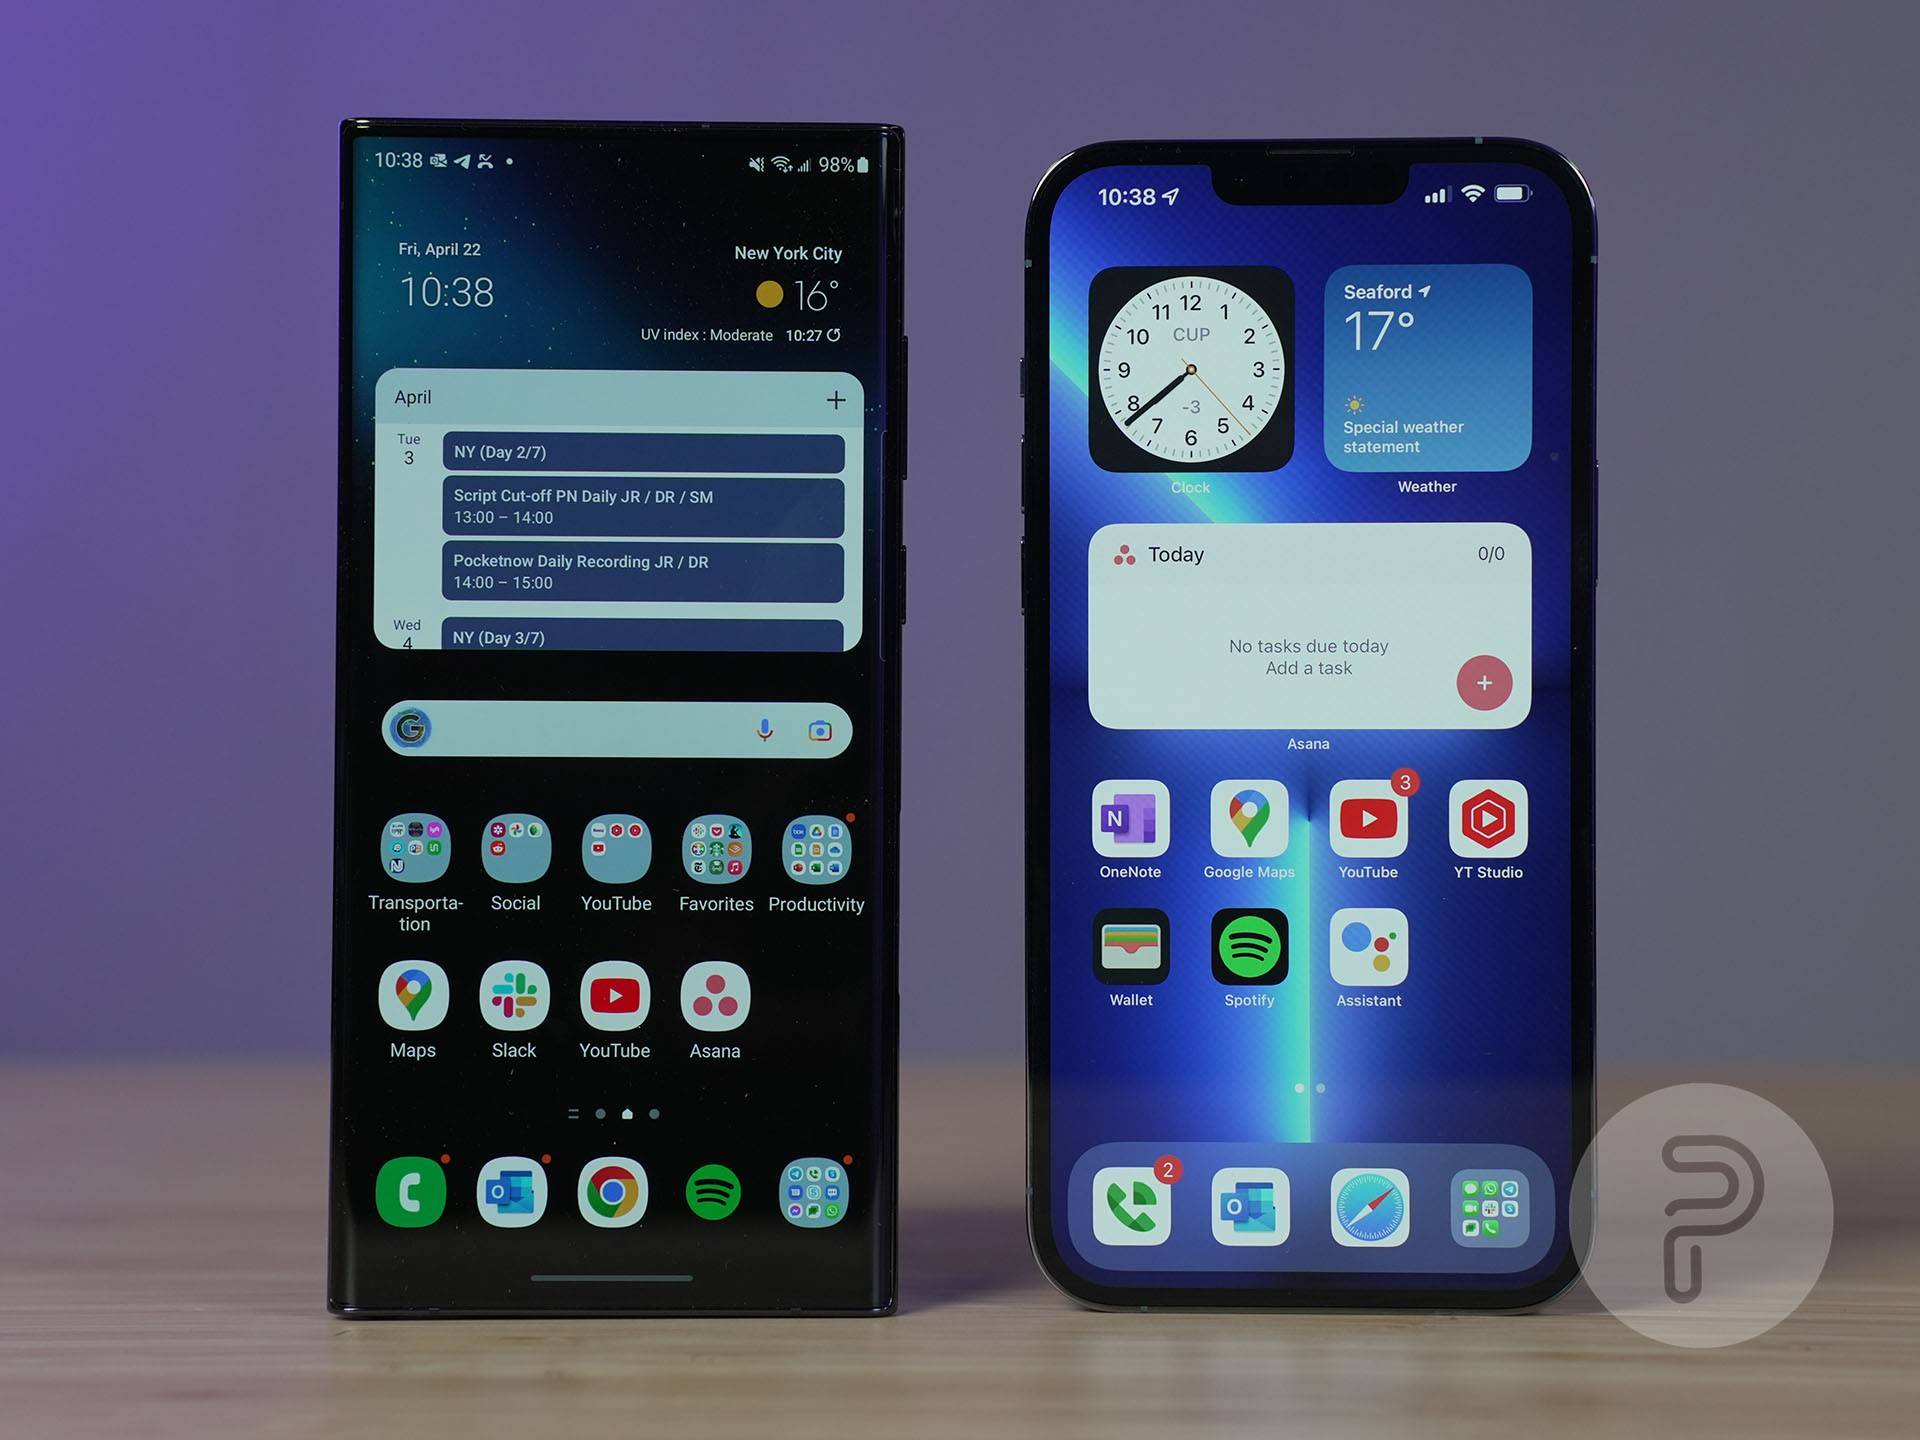 Galaxy S22 Ultra vs iPhone 13 Pro Max